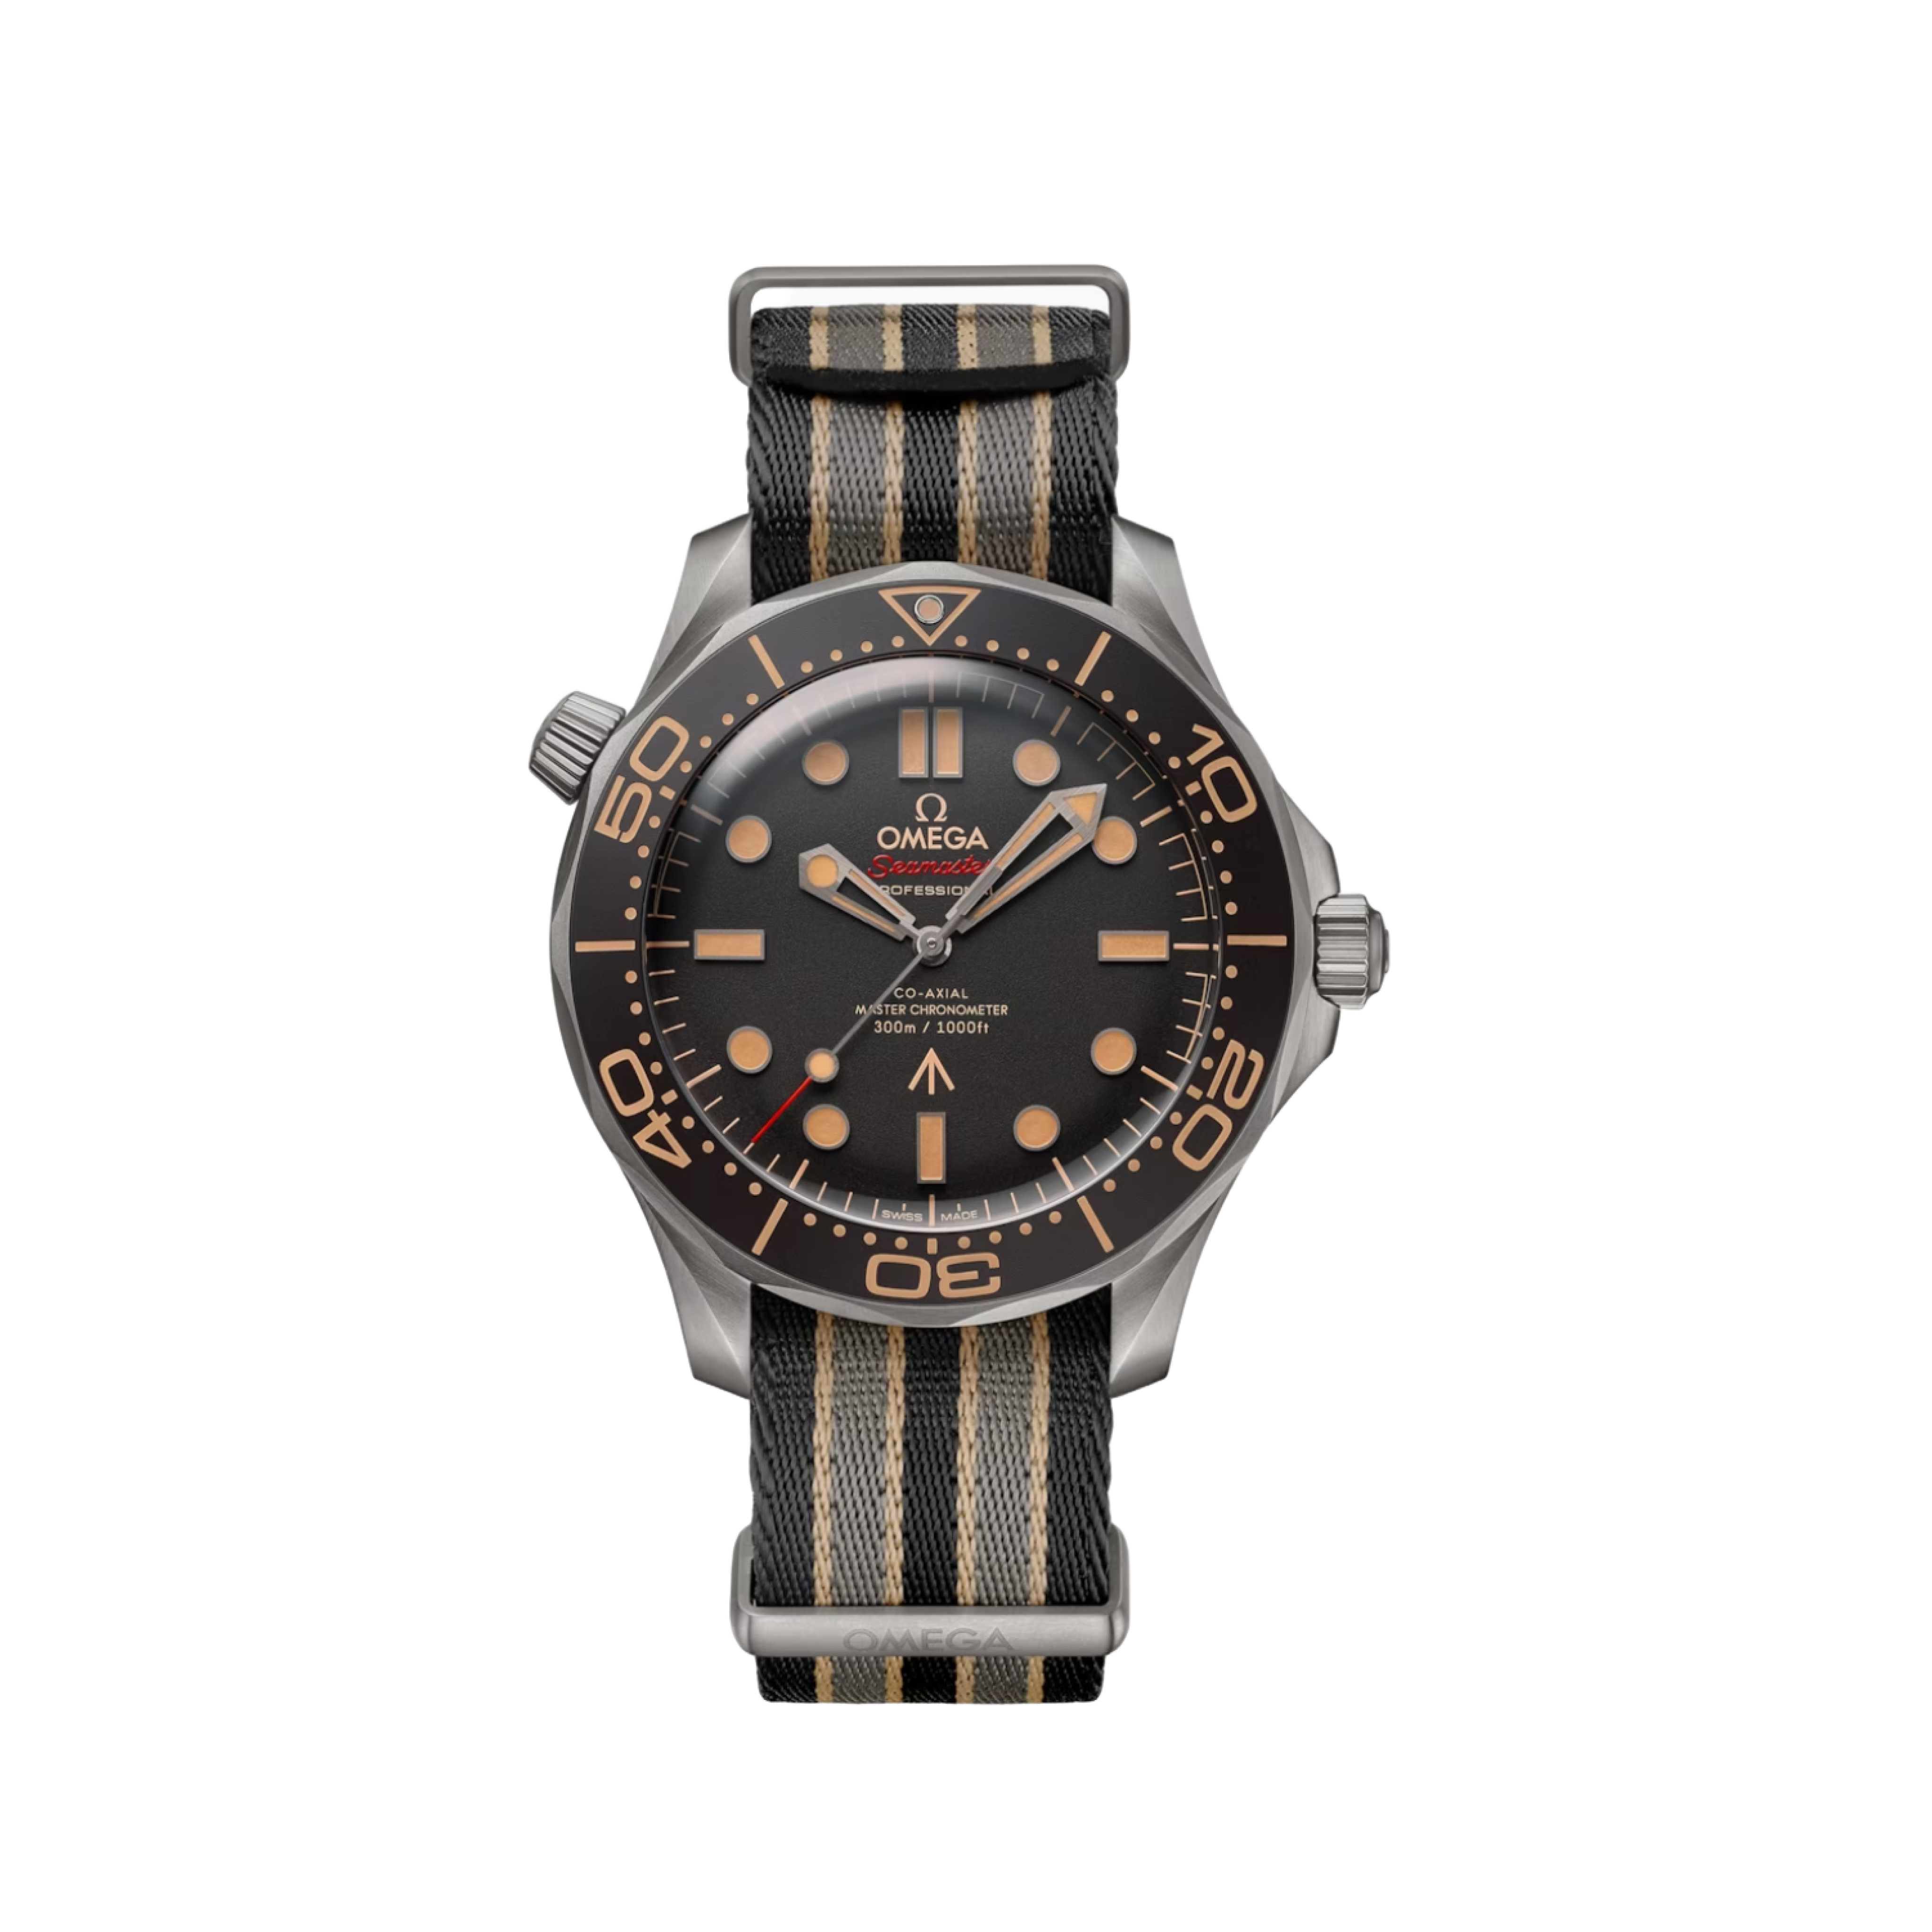 Omega Seamaster Diver 300M 007 edition 210.92.42.20.01.001